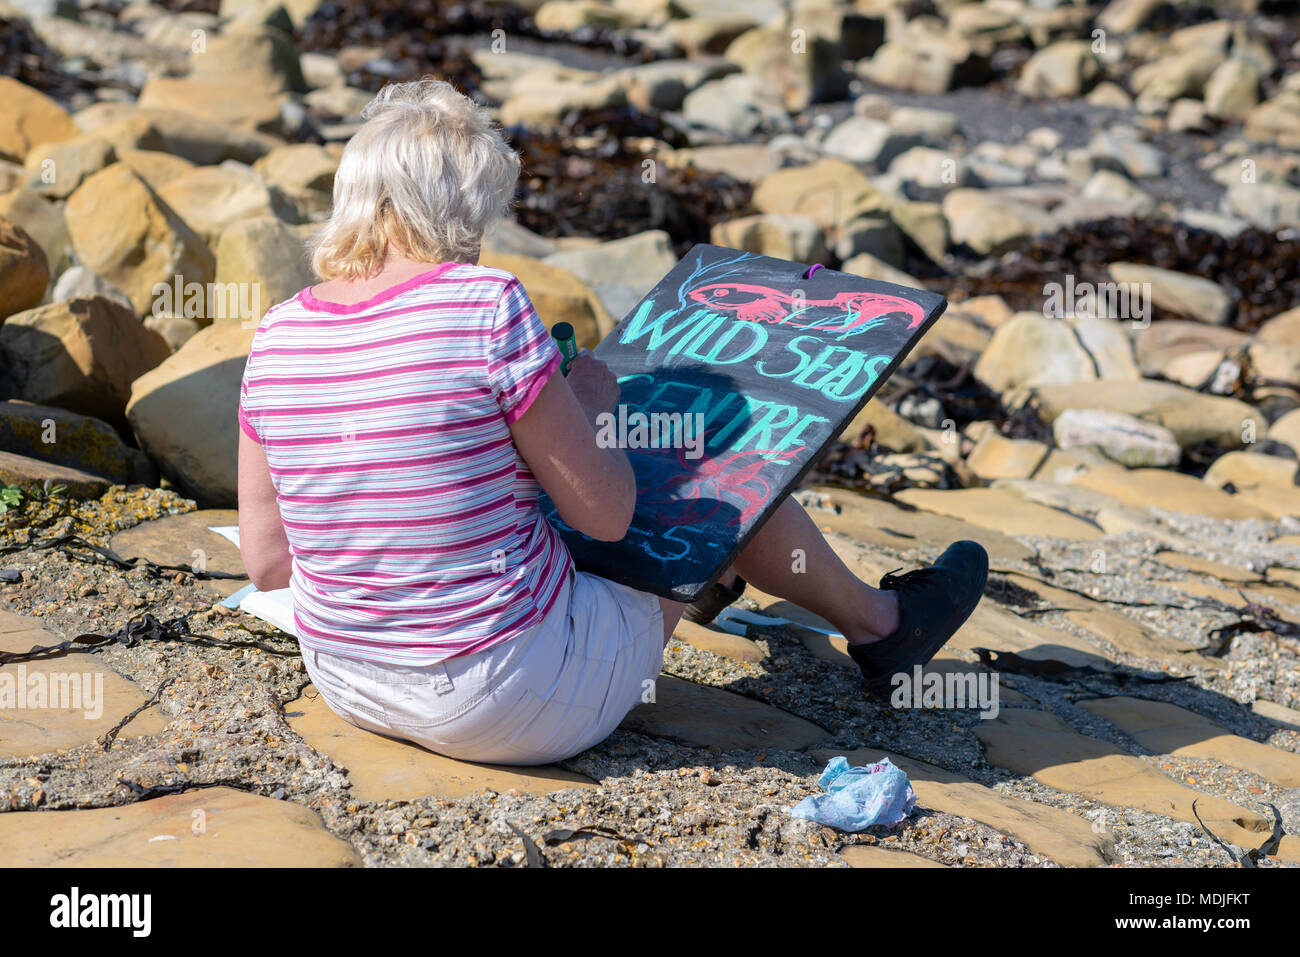 Woman sitting on rocks writing on a chalk board for the Wild Seas Centre at Kimmeridge Bay, Dorset, UK Stock Photo